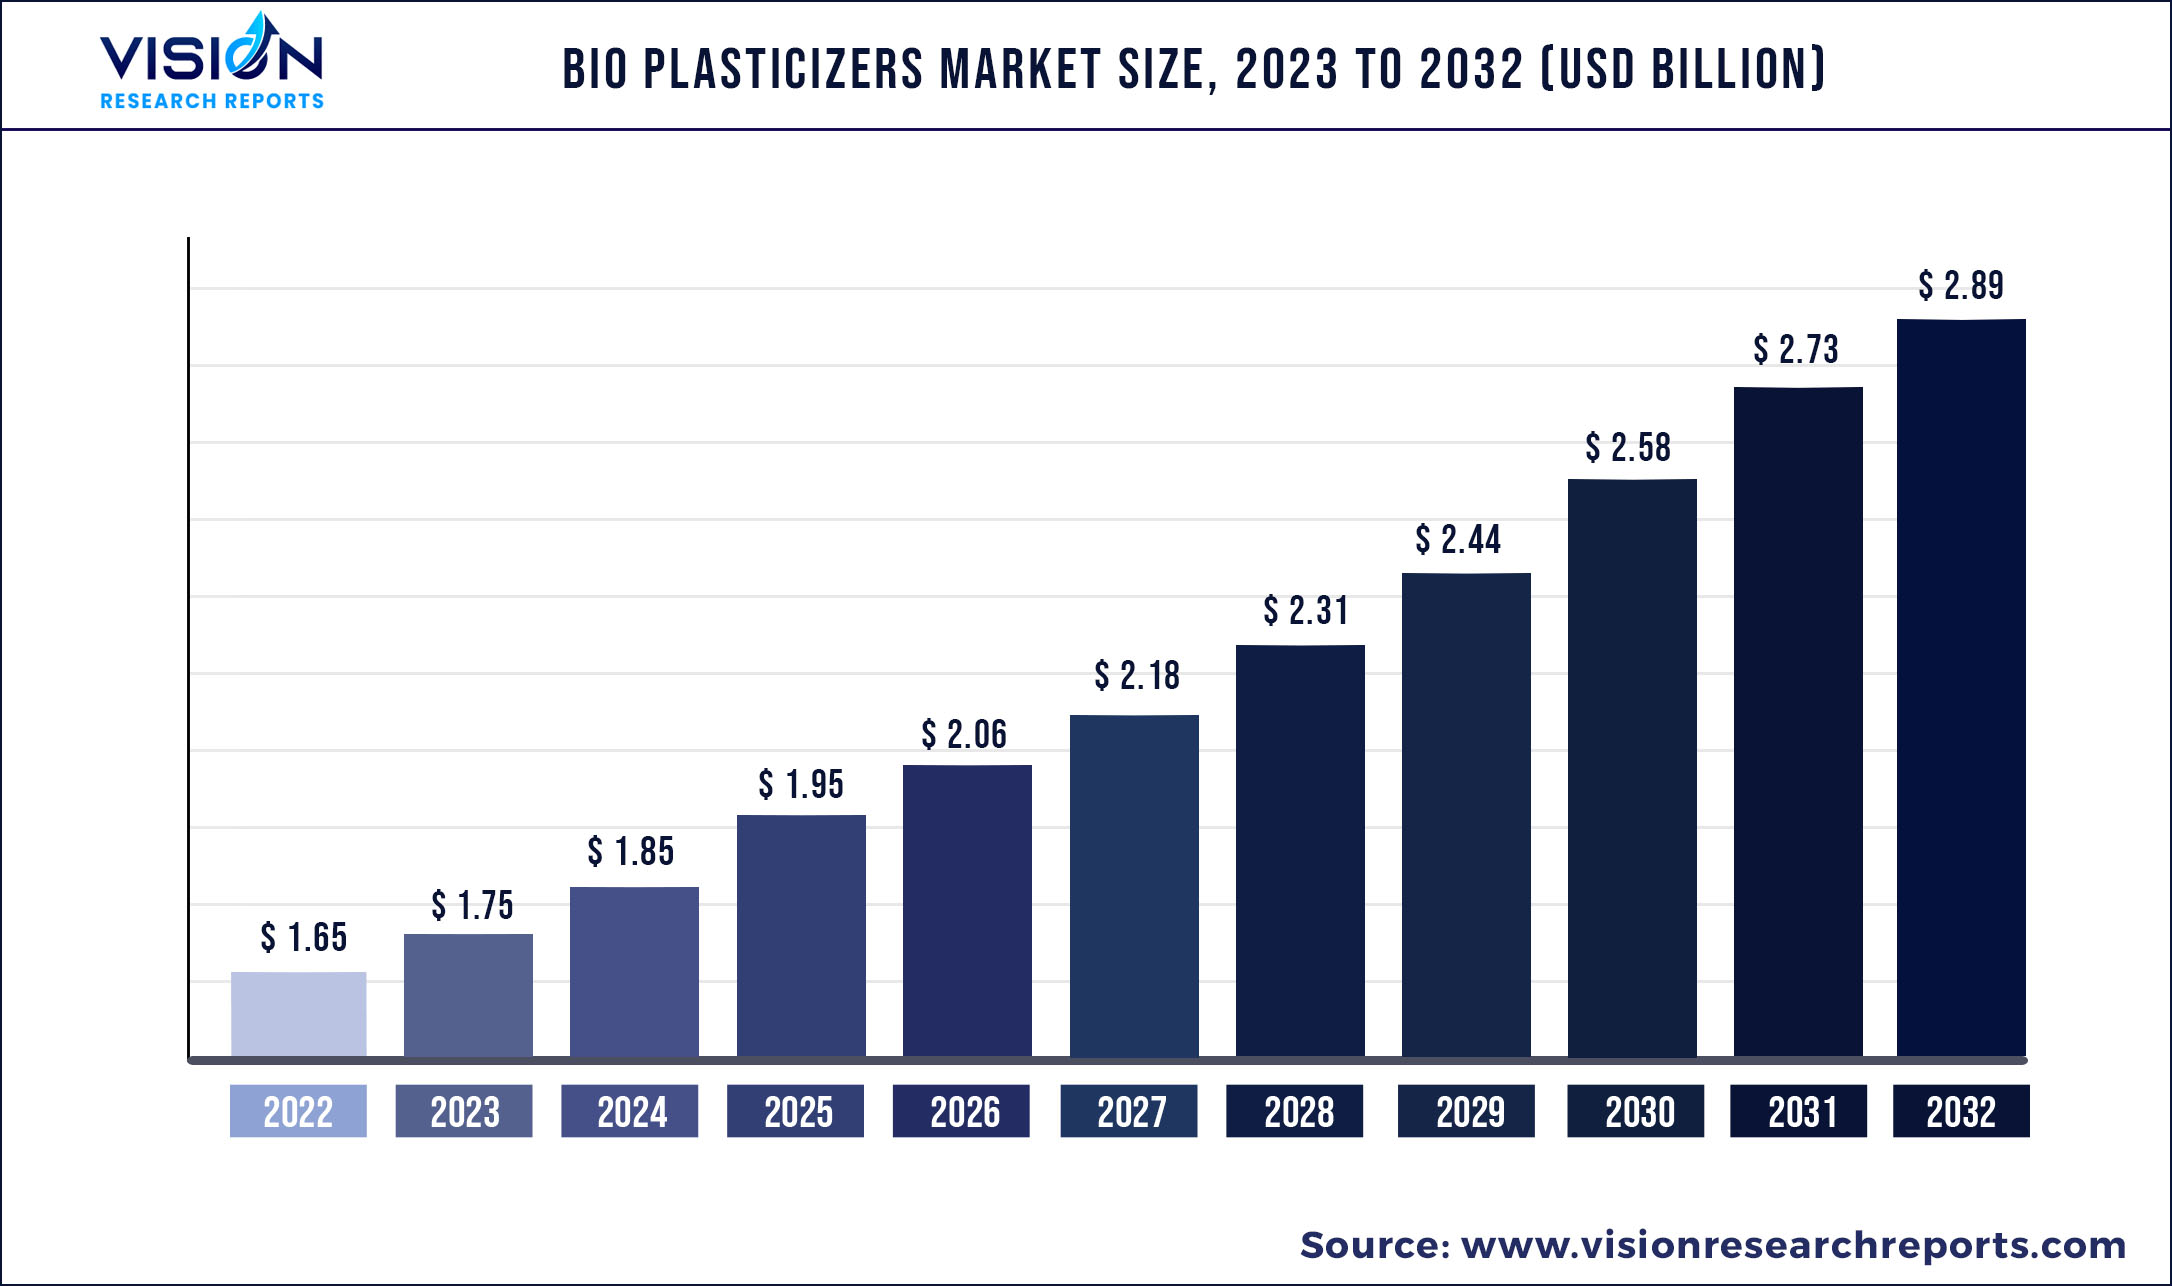 Bio Plasticizers Market Size 2023 to 2032